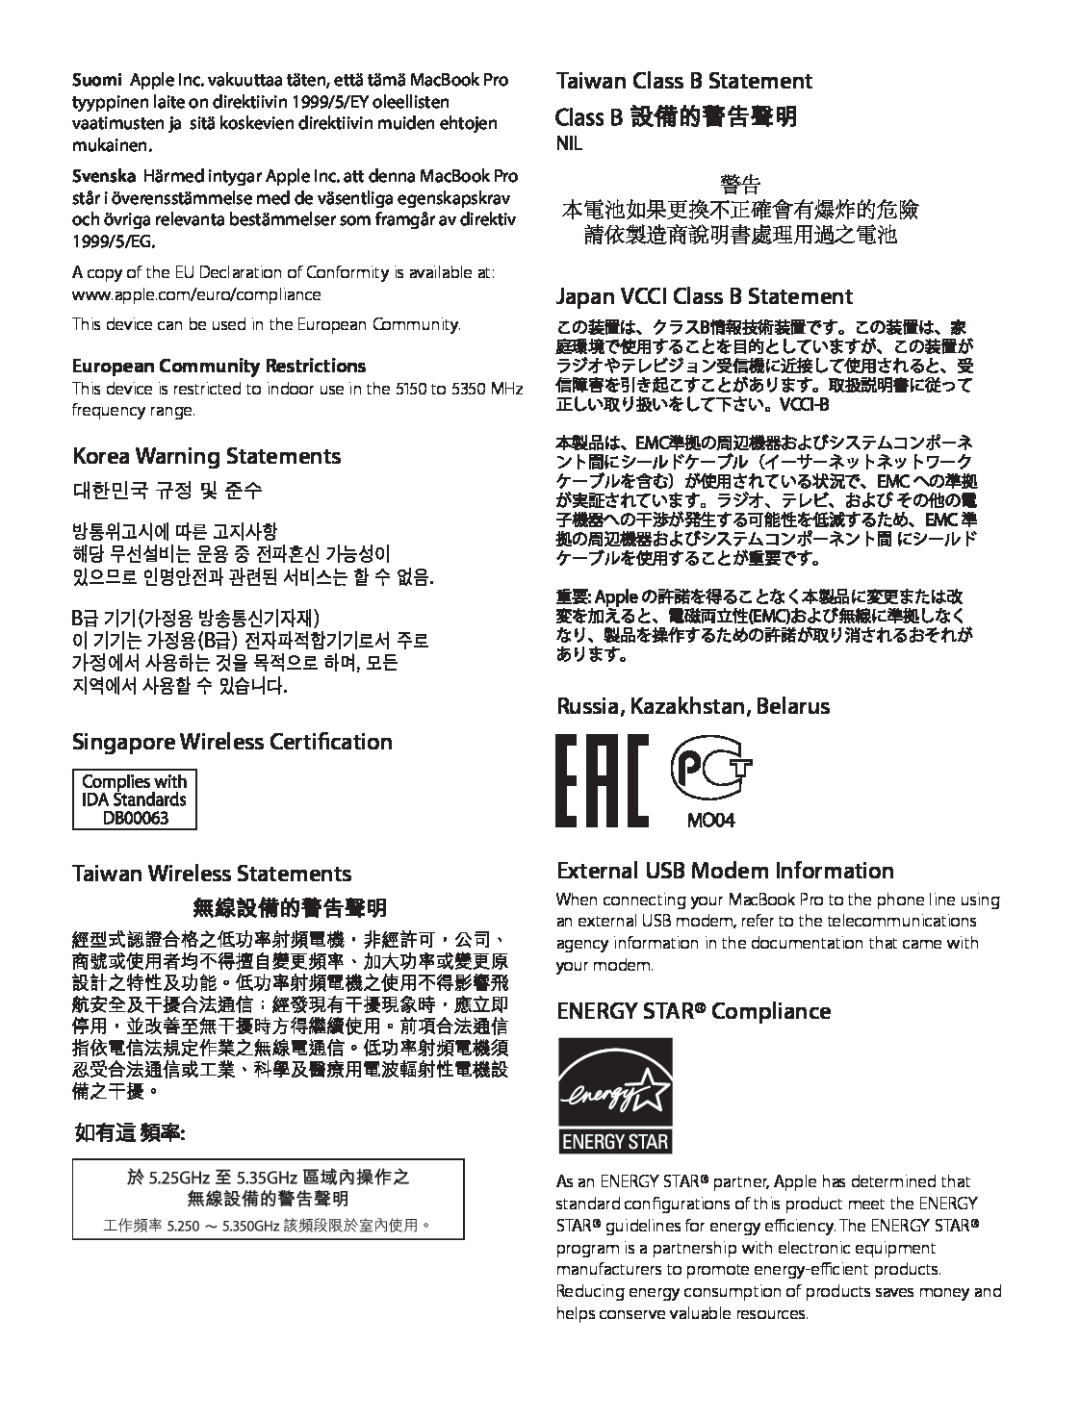 Apple ME116LL/A Taiwan Class B Statement, Japan VCCI Class B Statement, Korea Warning Statements, ENERGY STAR Compliance 